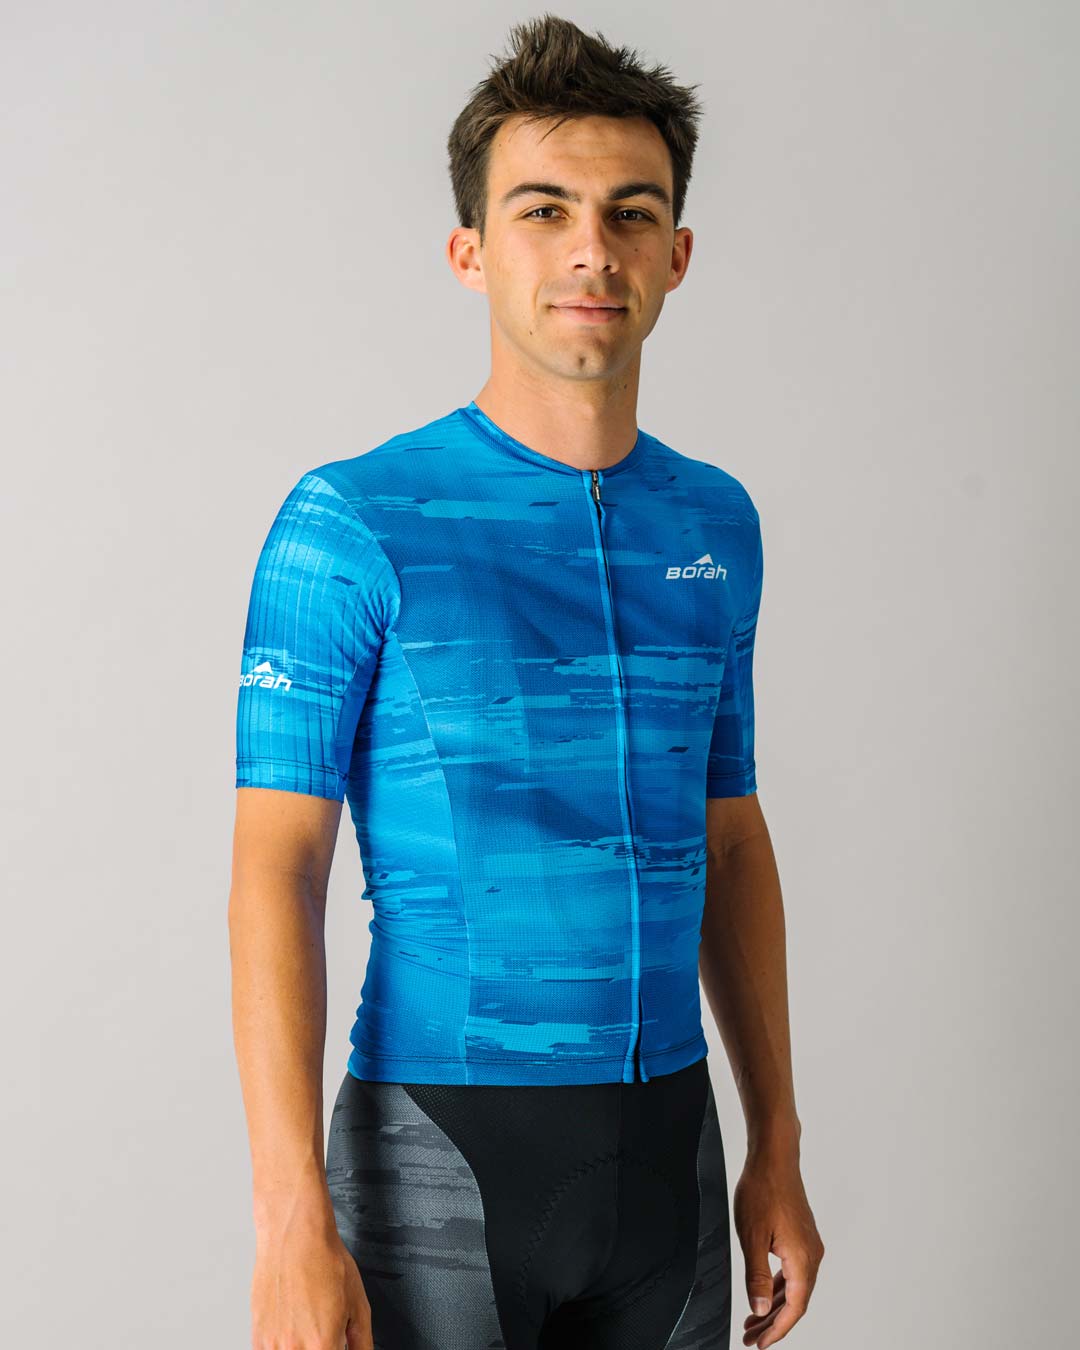 OTW Spark Cycling Jersey | Made in the USA | Borah Teamwear